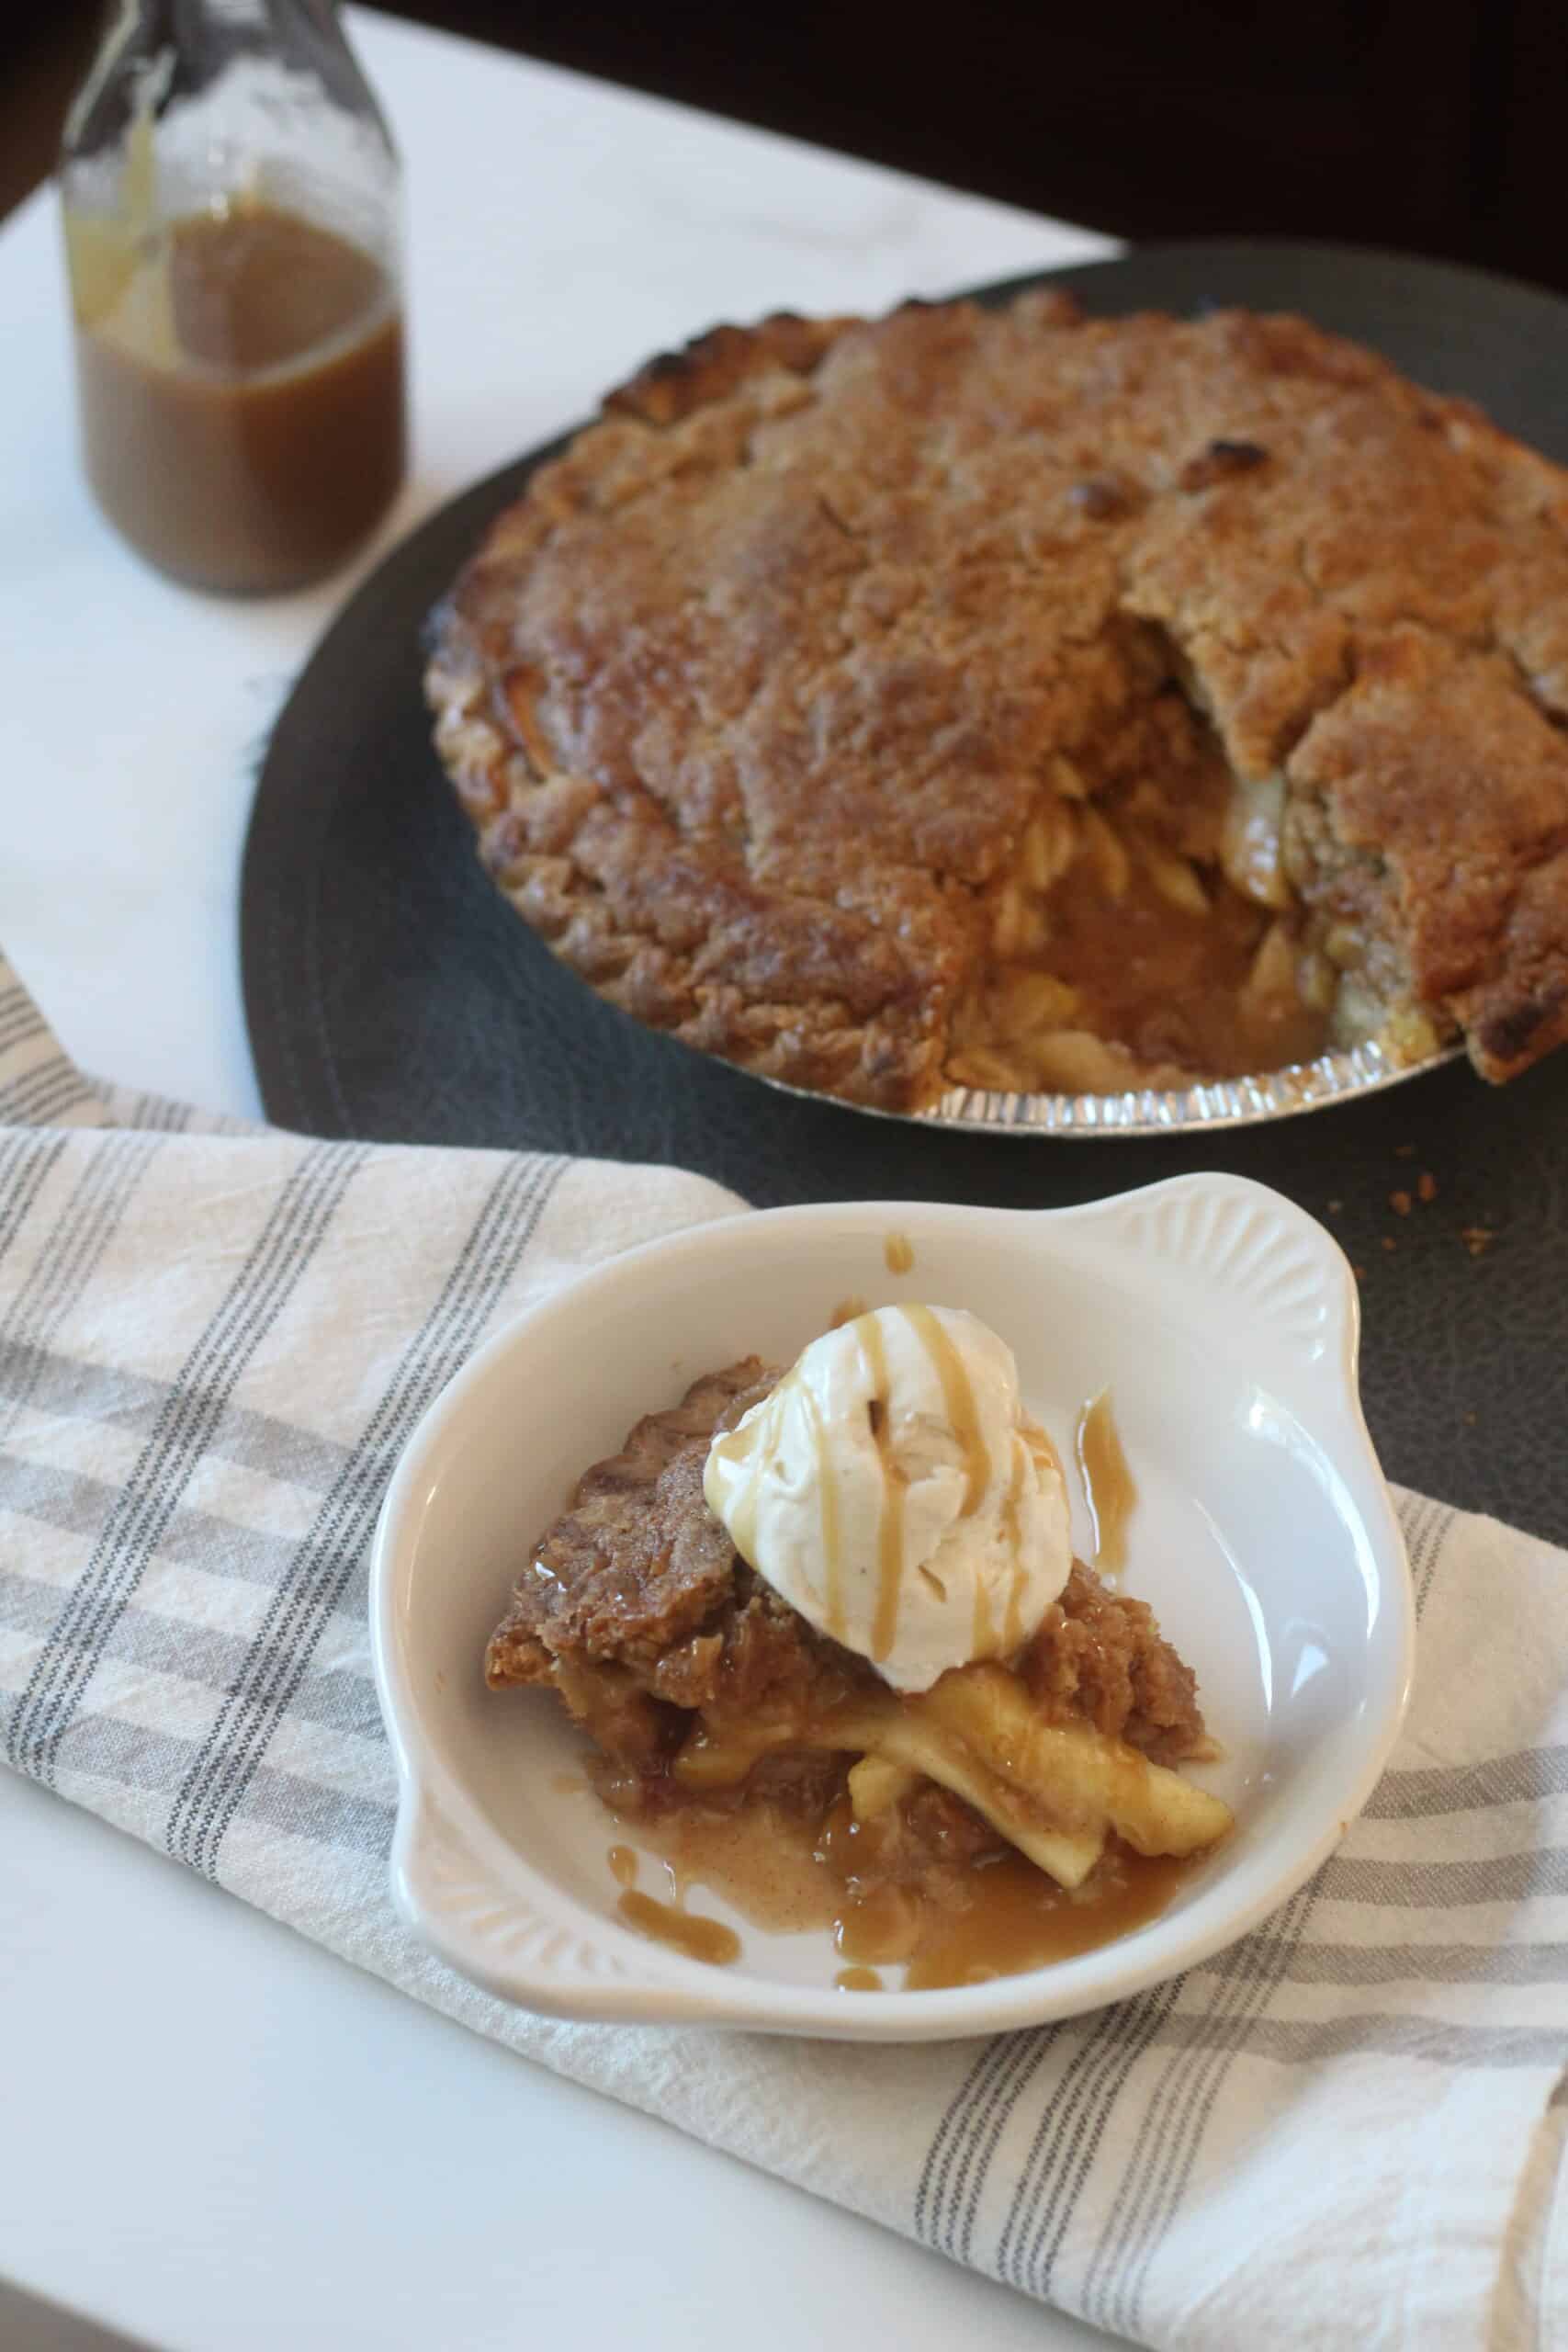 Apple Crumb Pie with Caramel and Ice Cream